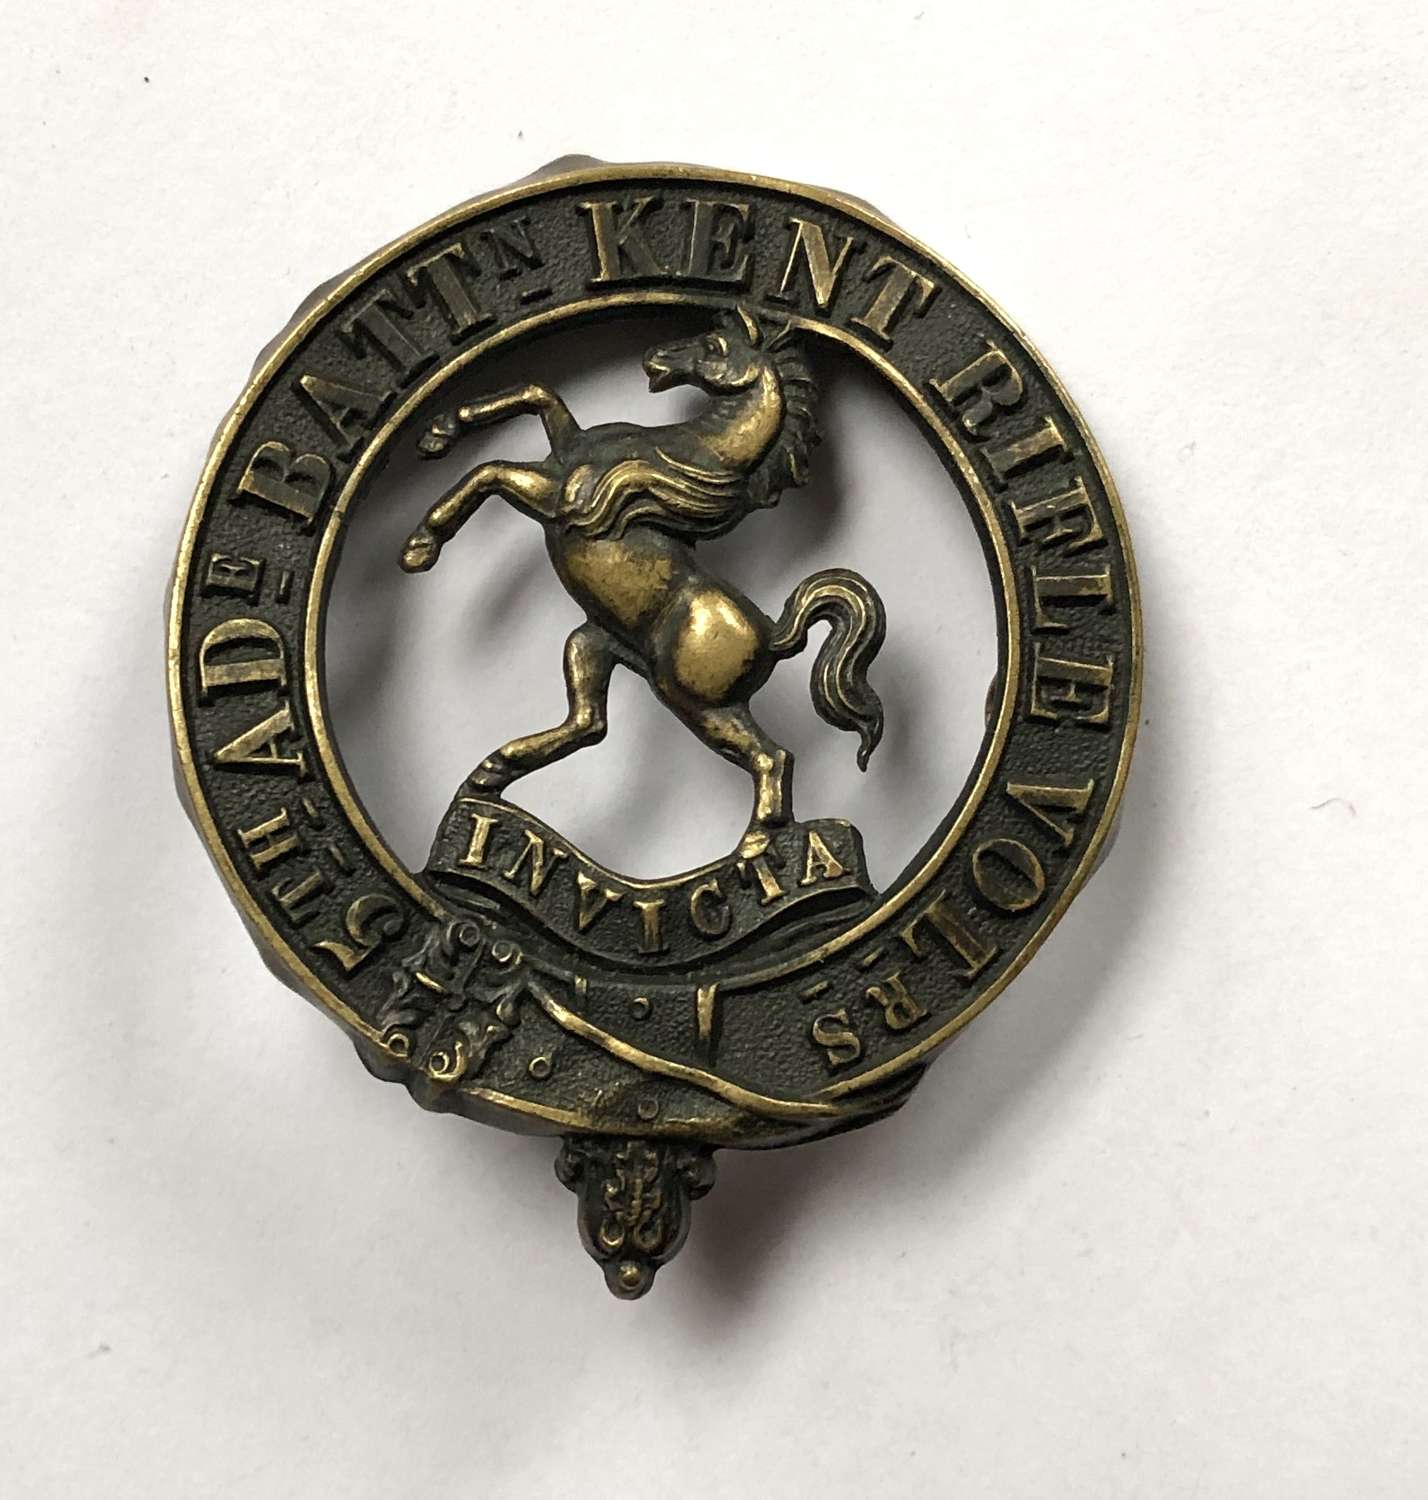 5th Admin. Bn. (Weald of) Kent Rifle Vols Victorian glengarry badge